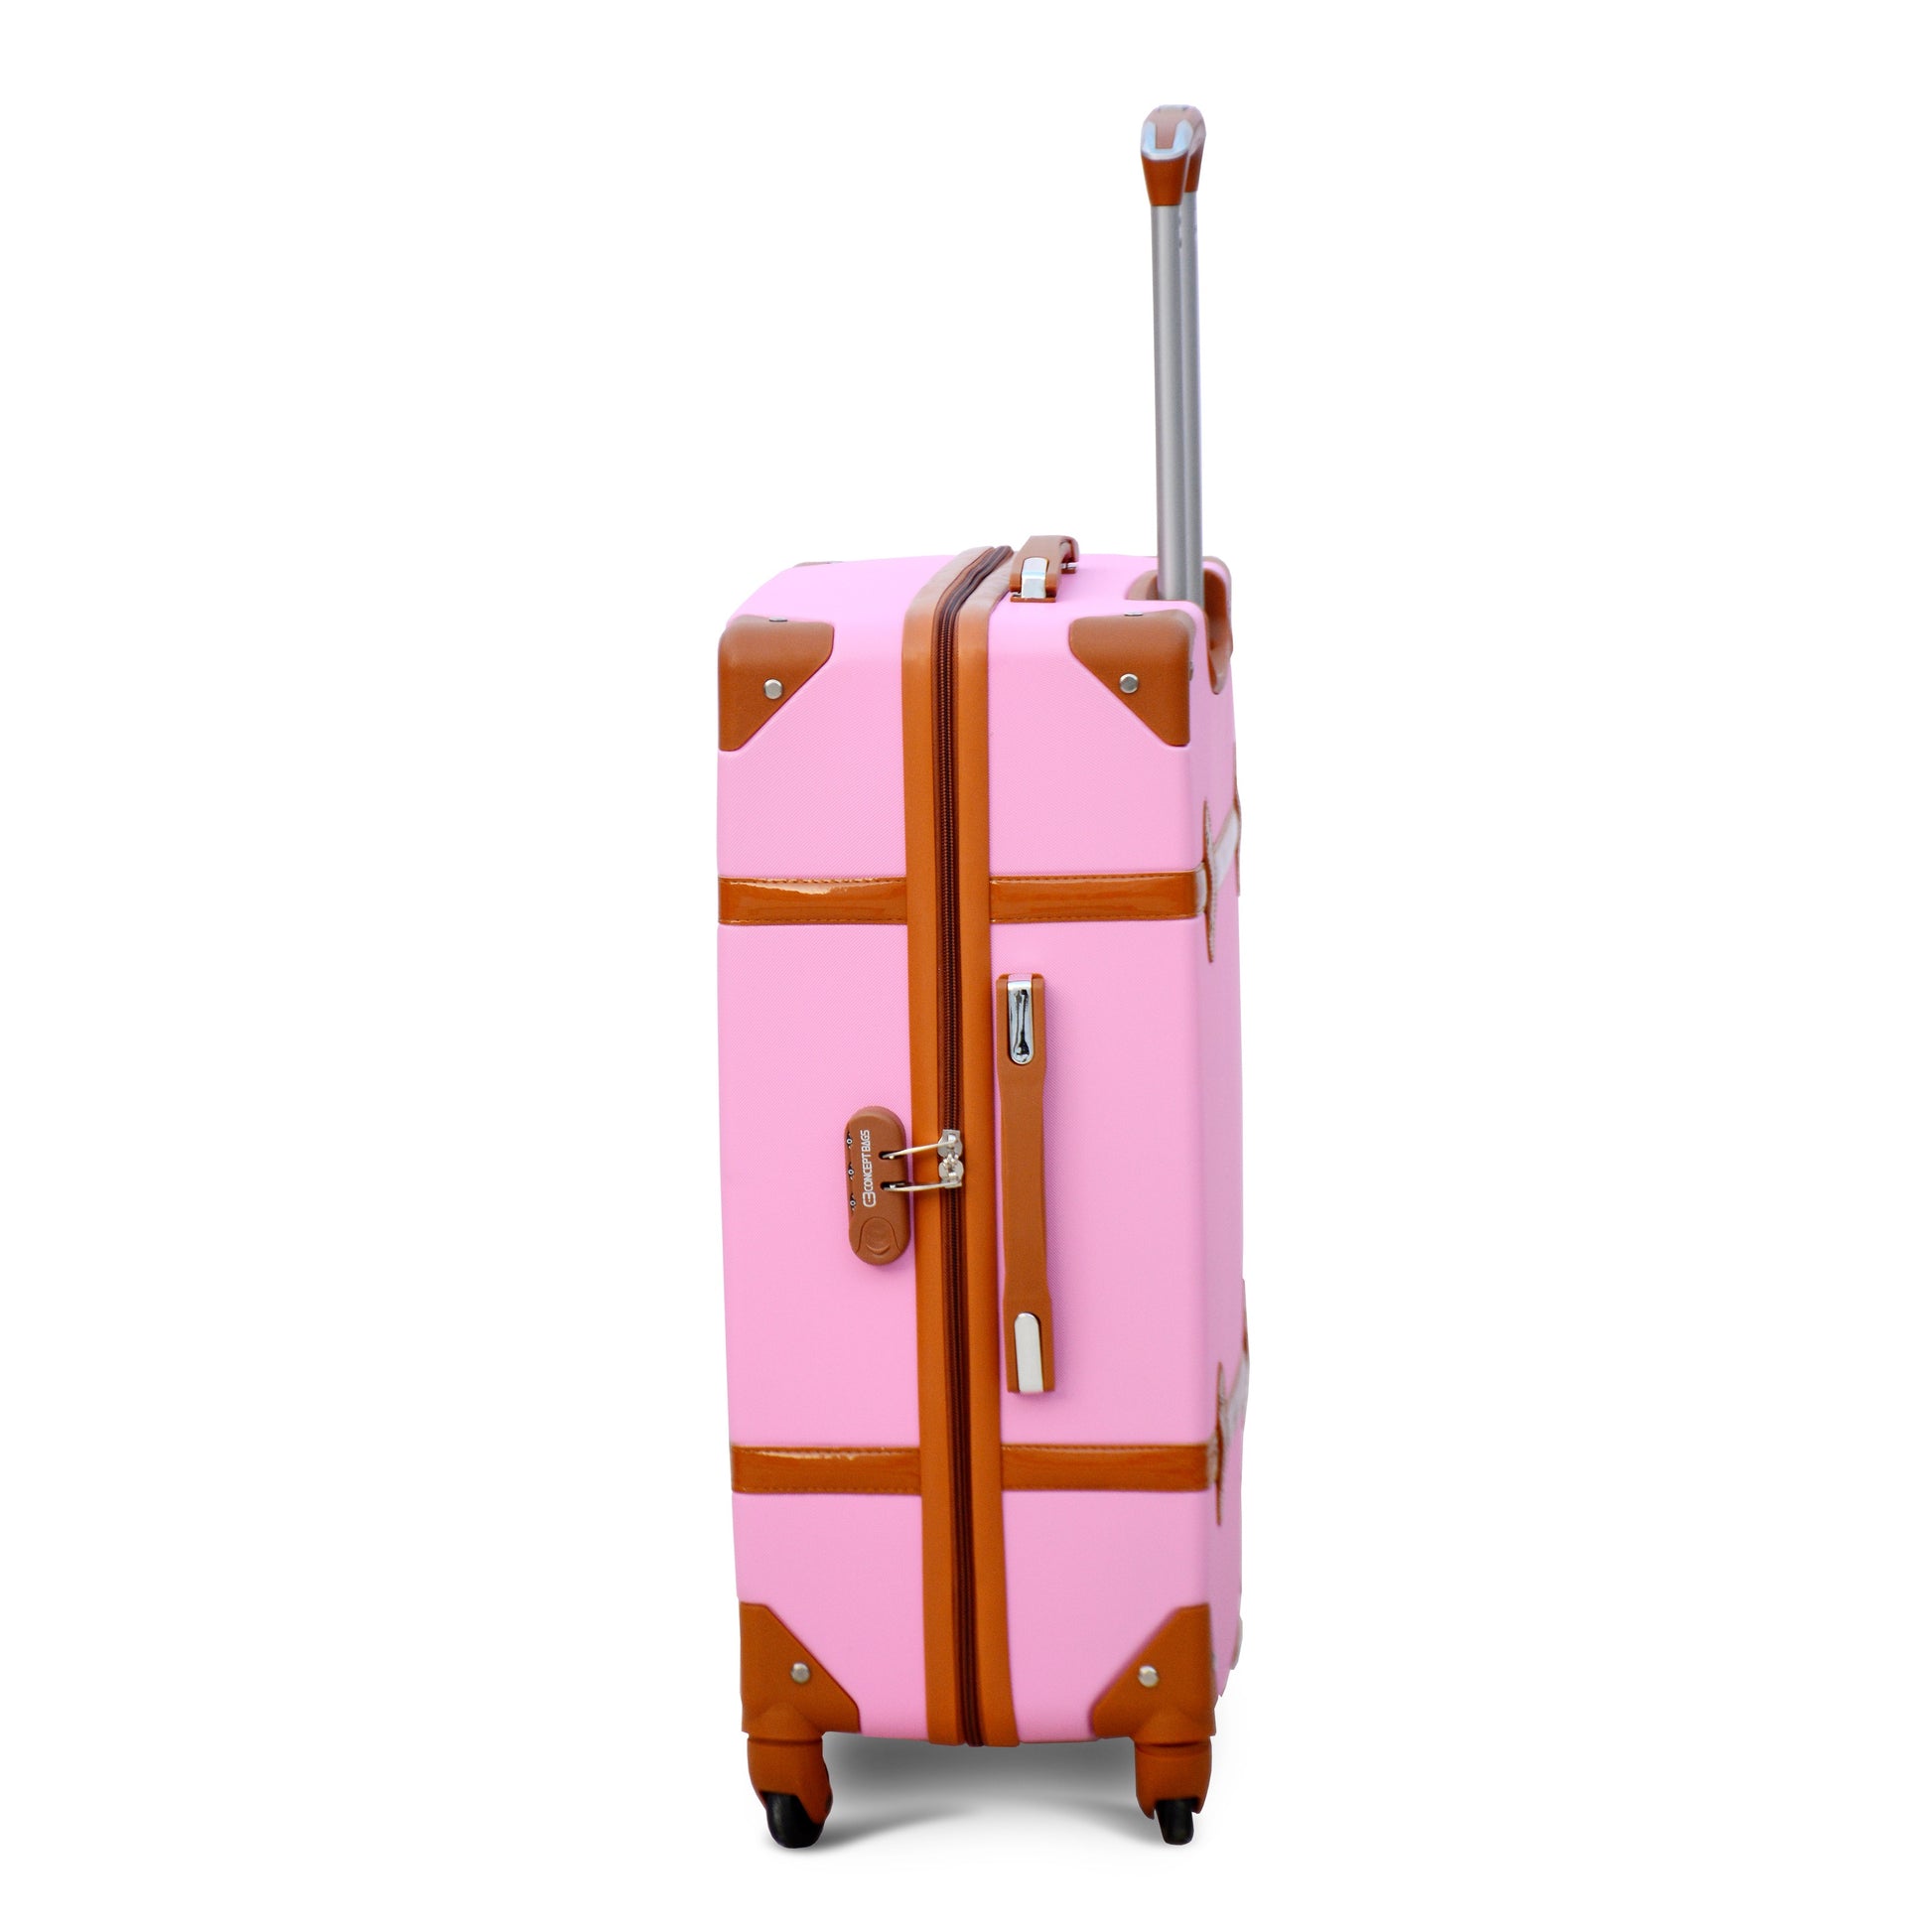 Corner guard lightweight full set low price pink colour luggage